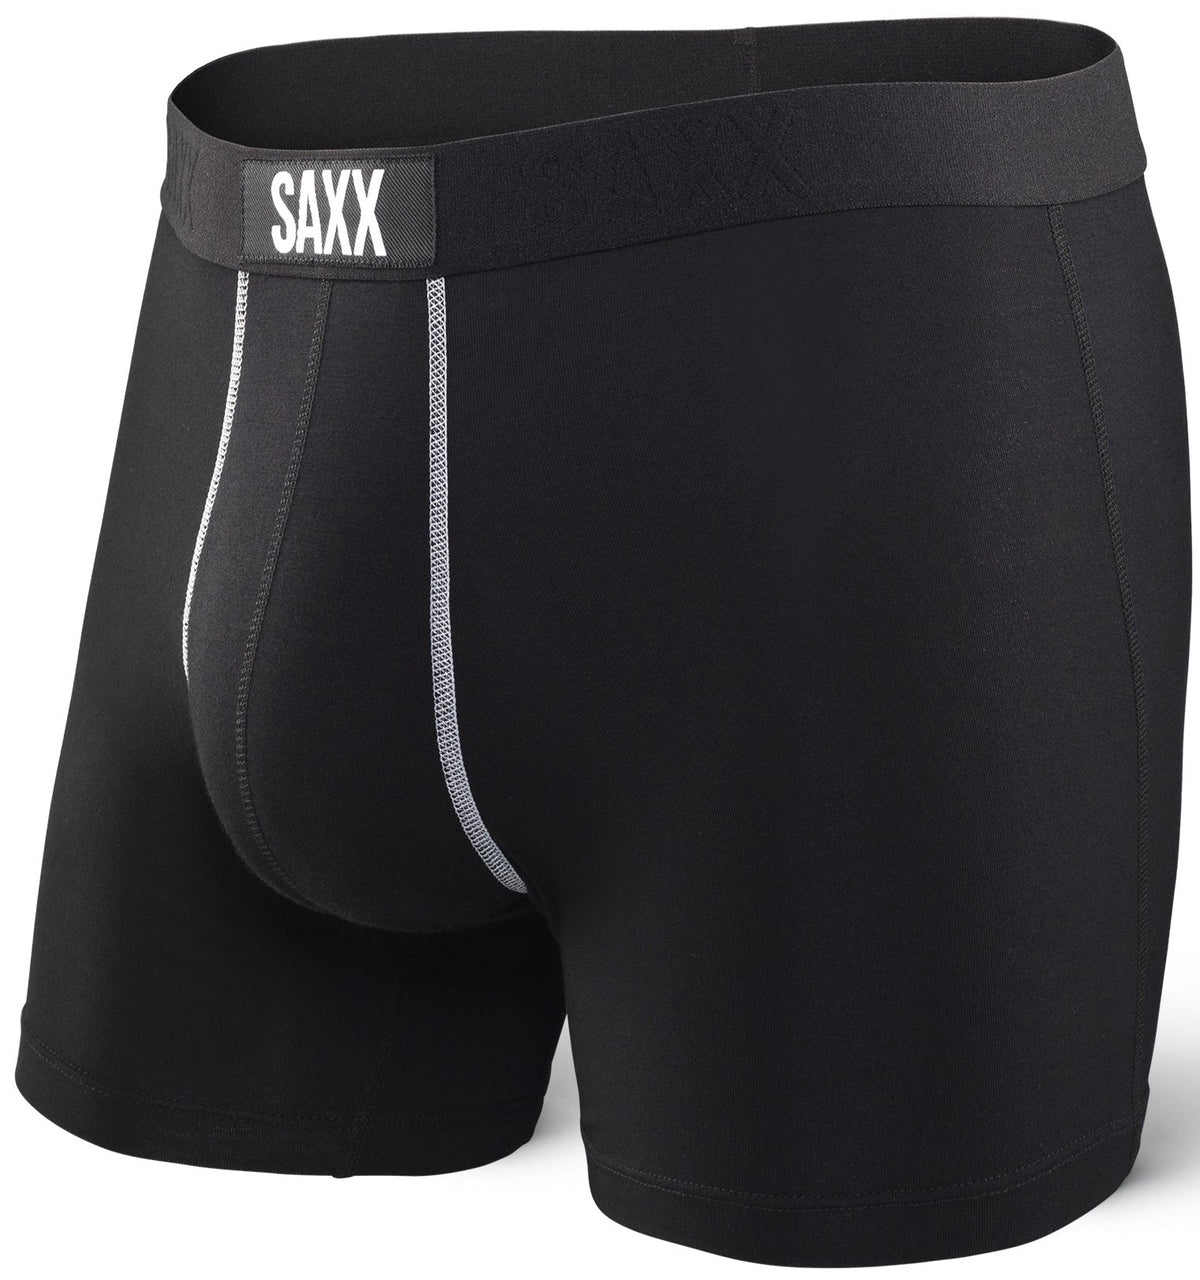 SAXX Undercover Boxer Brief Fly Black –